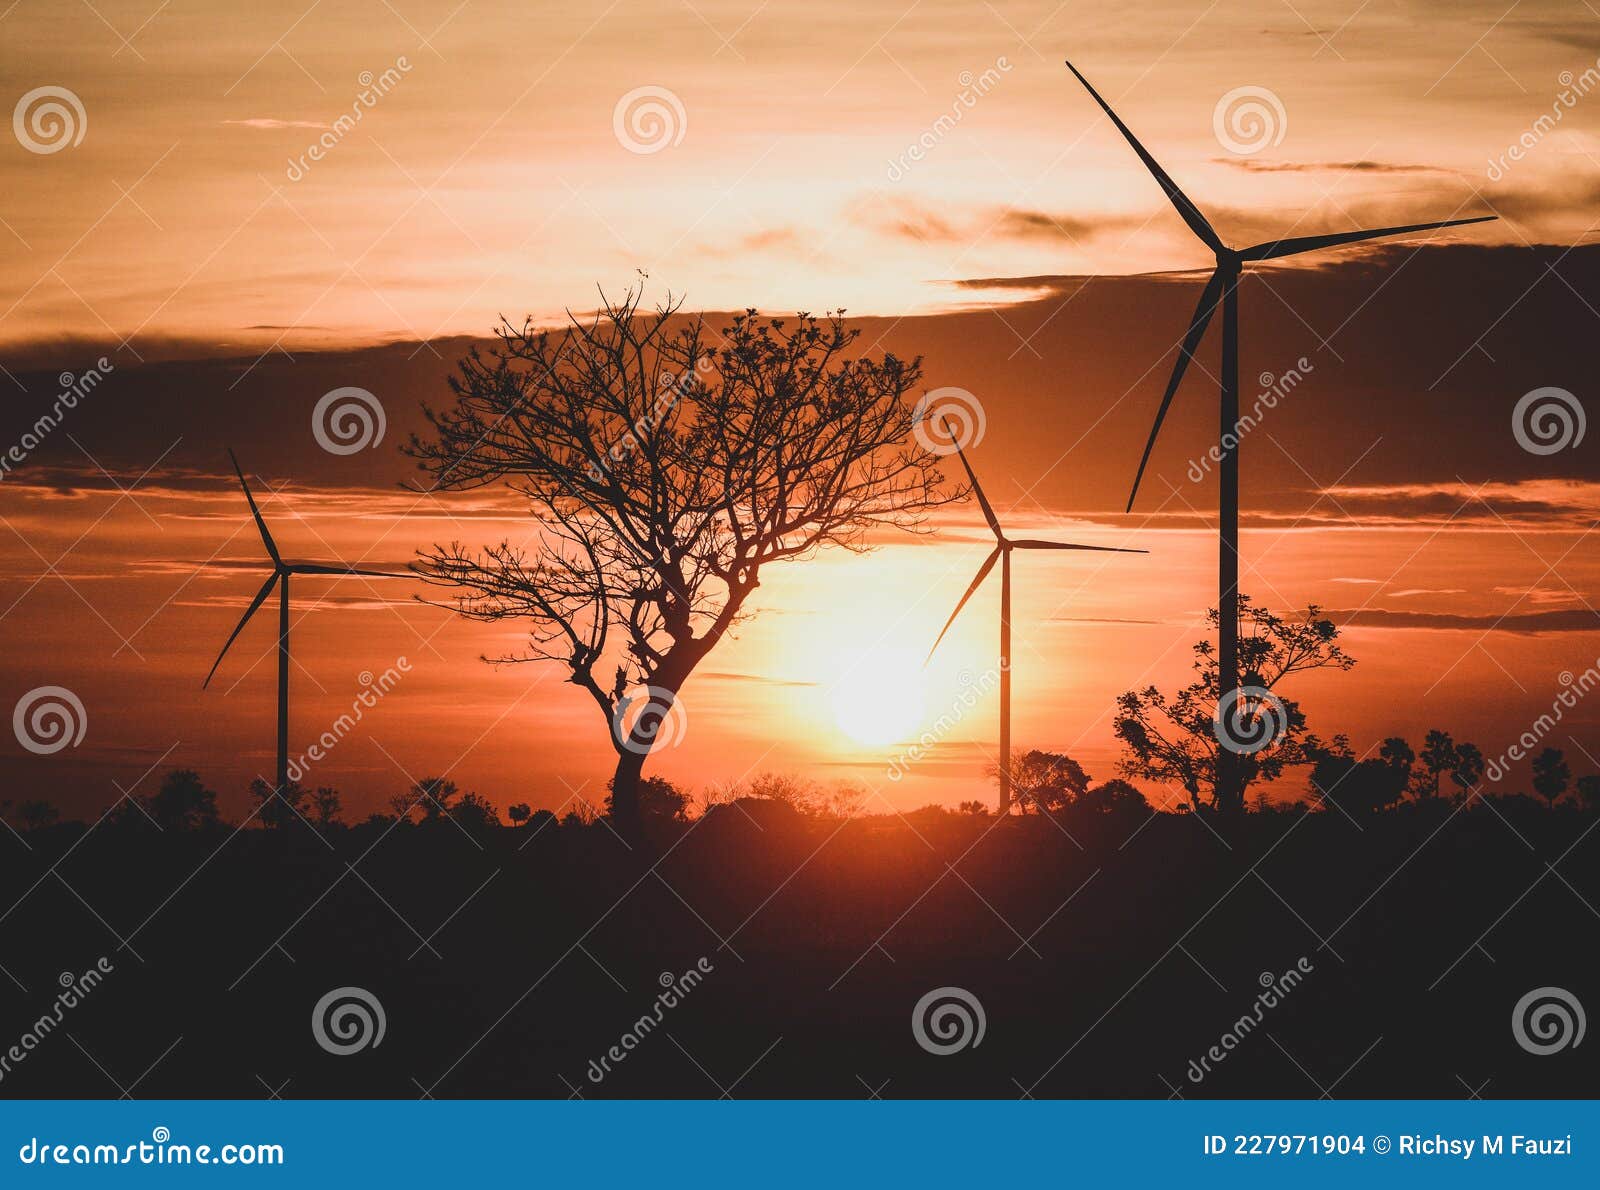 sunset view at wind turbin area, jeneponto, sulawesi, indonesia